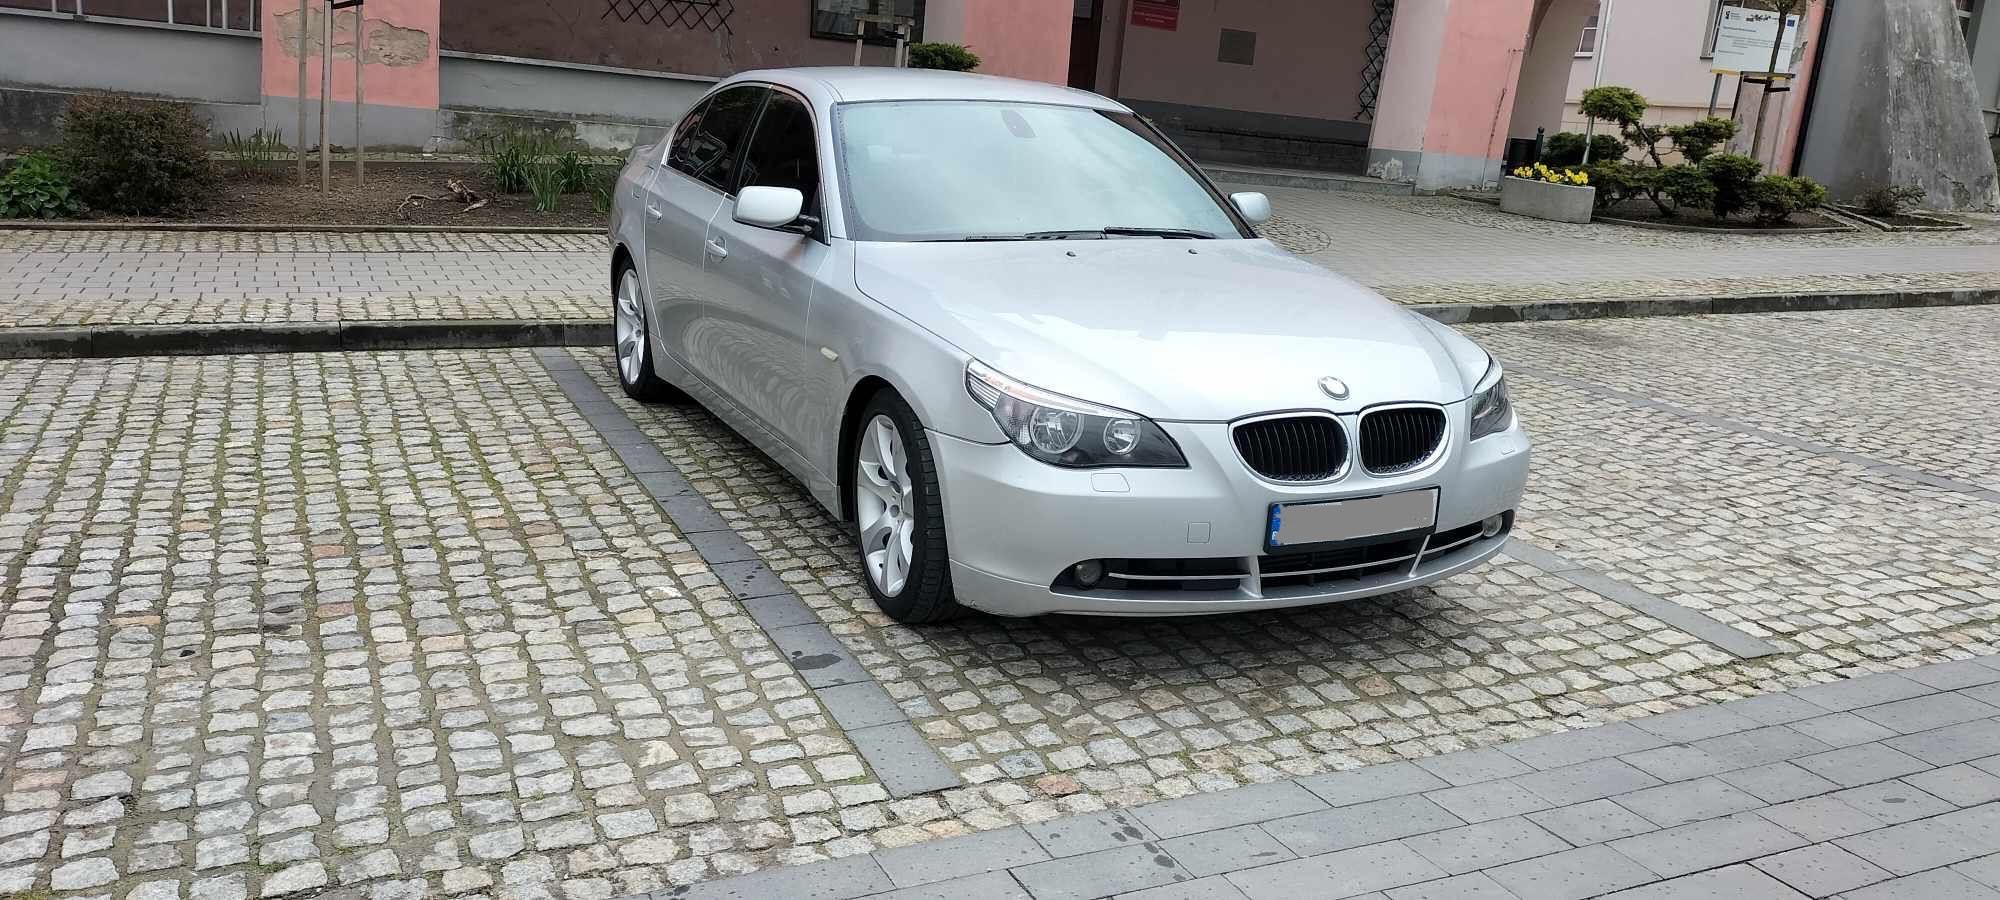 BMW E60 3.0 d 218 KM